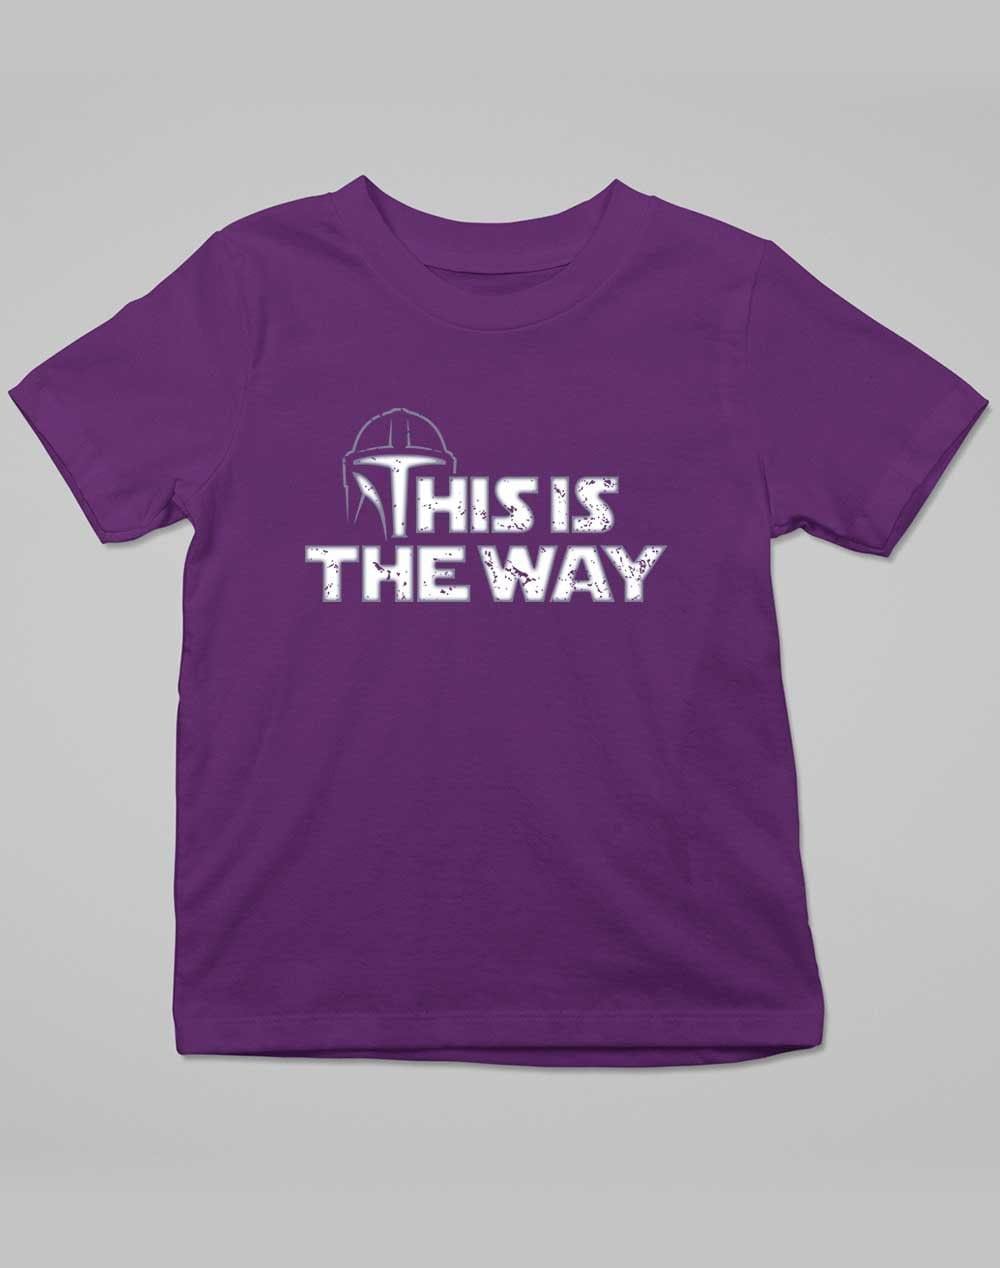 This is the Way - Kids T-Shirt 3-4 years / Dark Purple  - Off World Tees